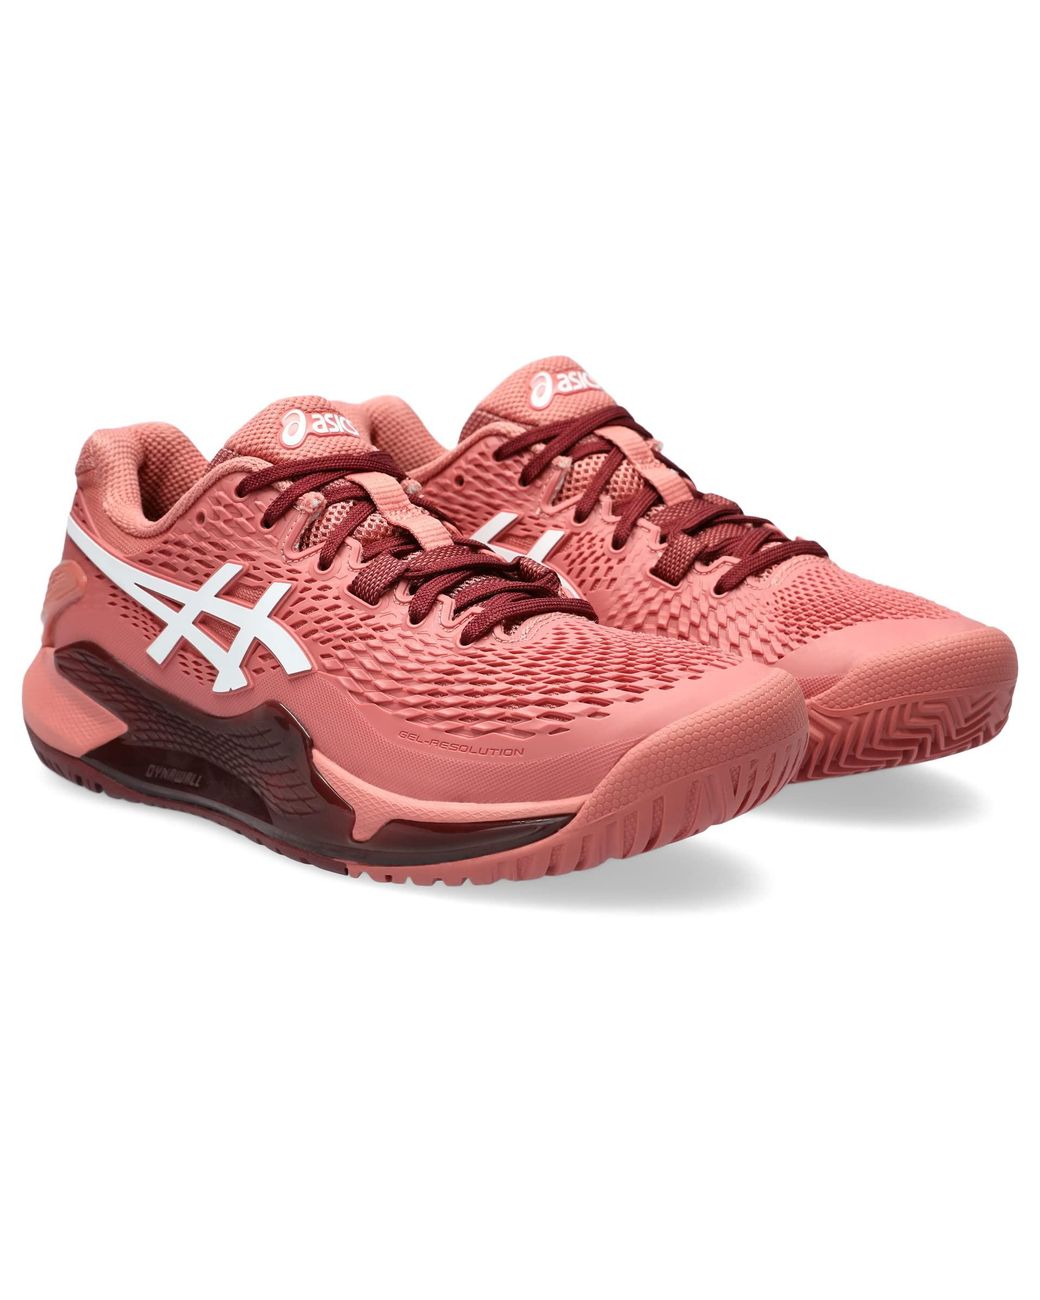 Asics Gel-resolution 9 Tennis Shoe in Red | Lyst